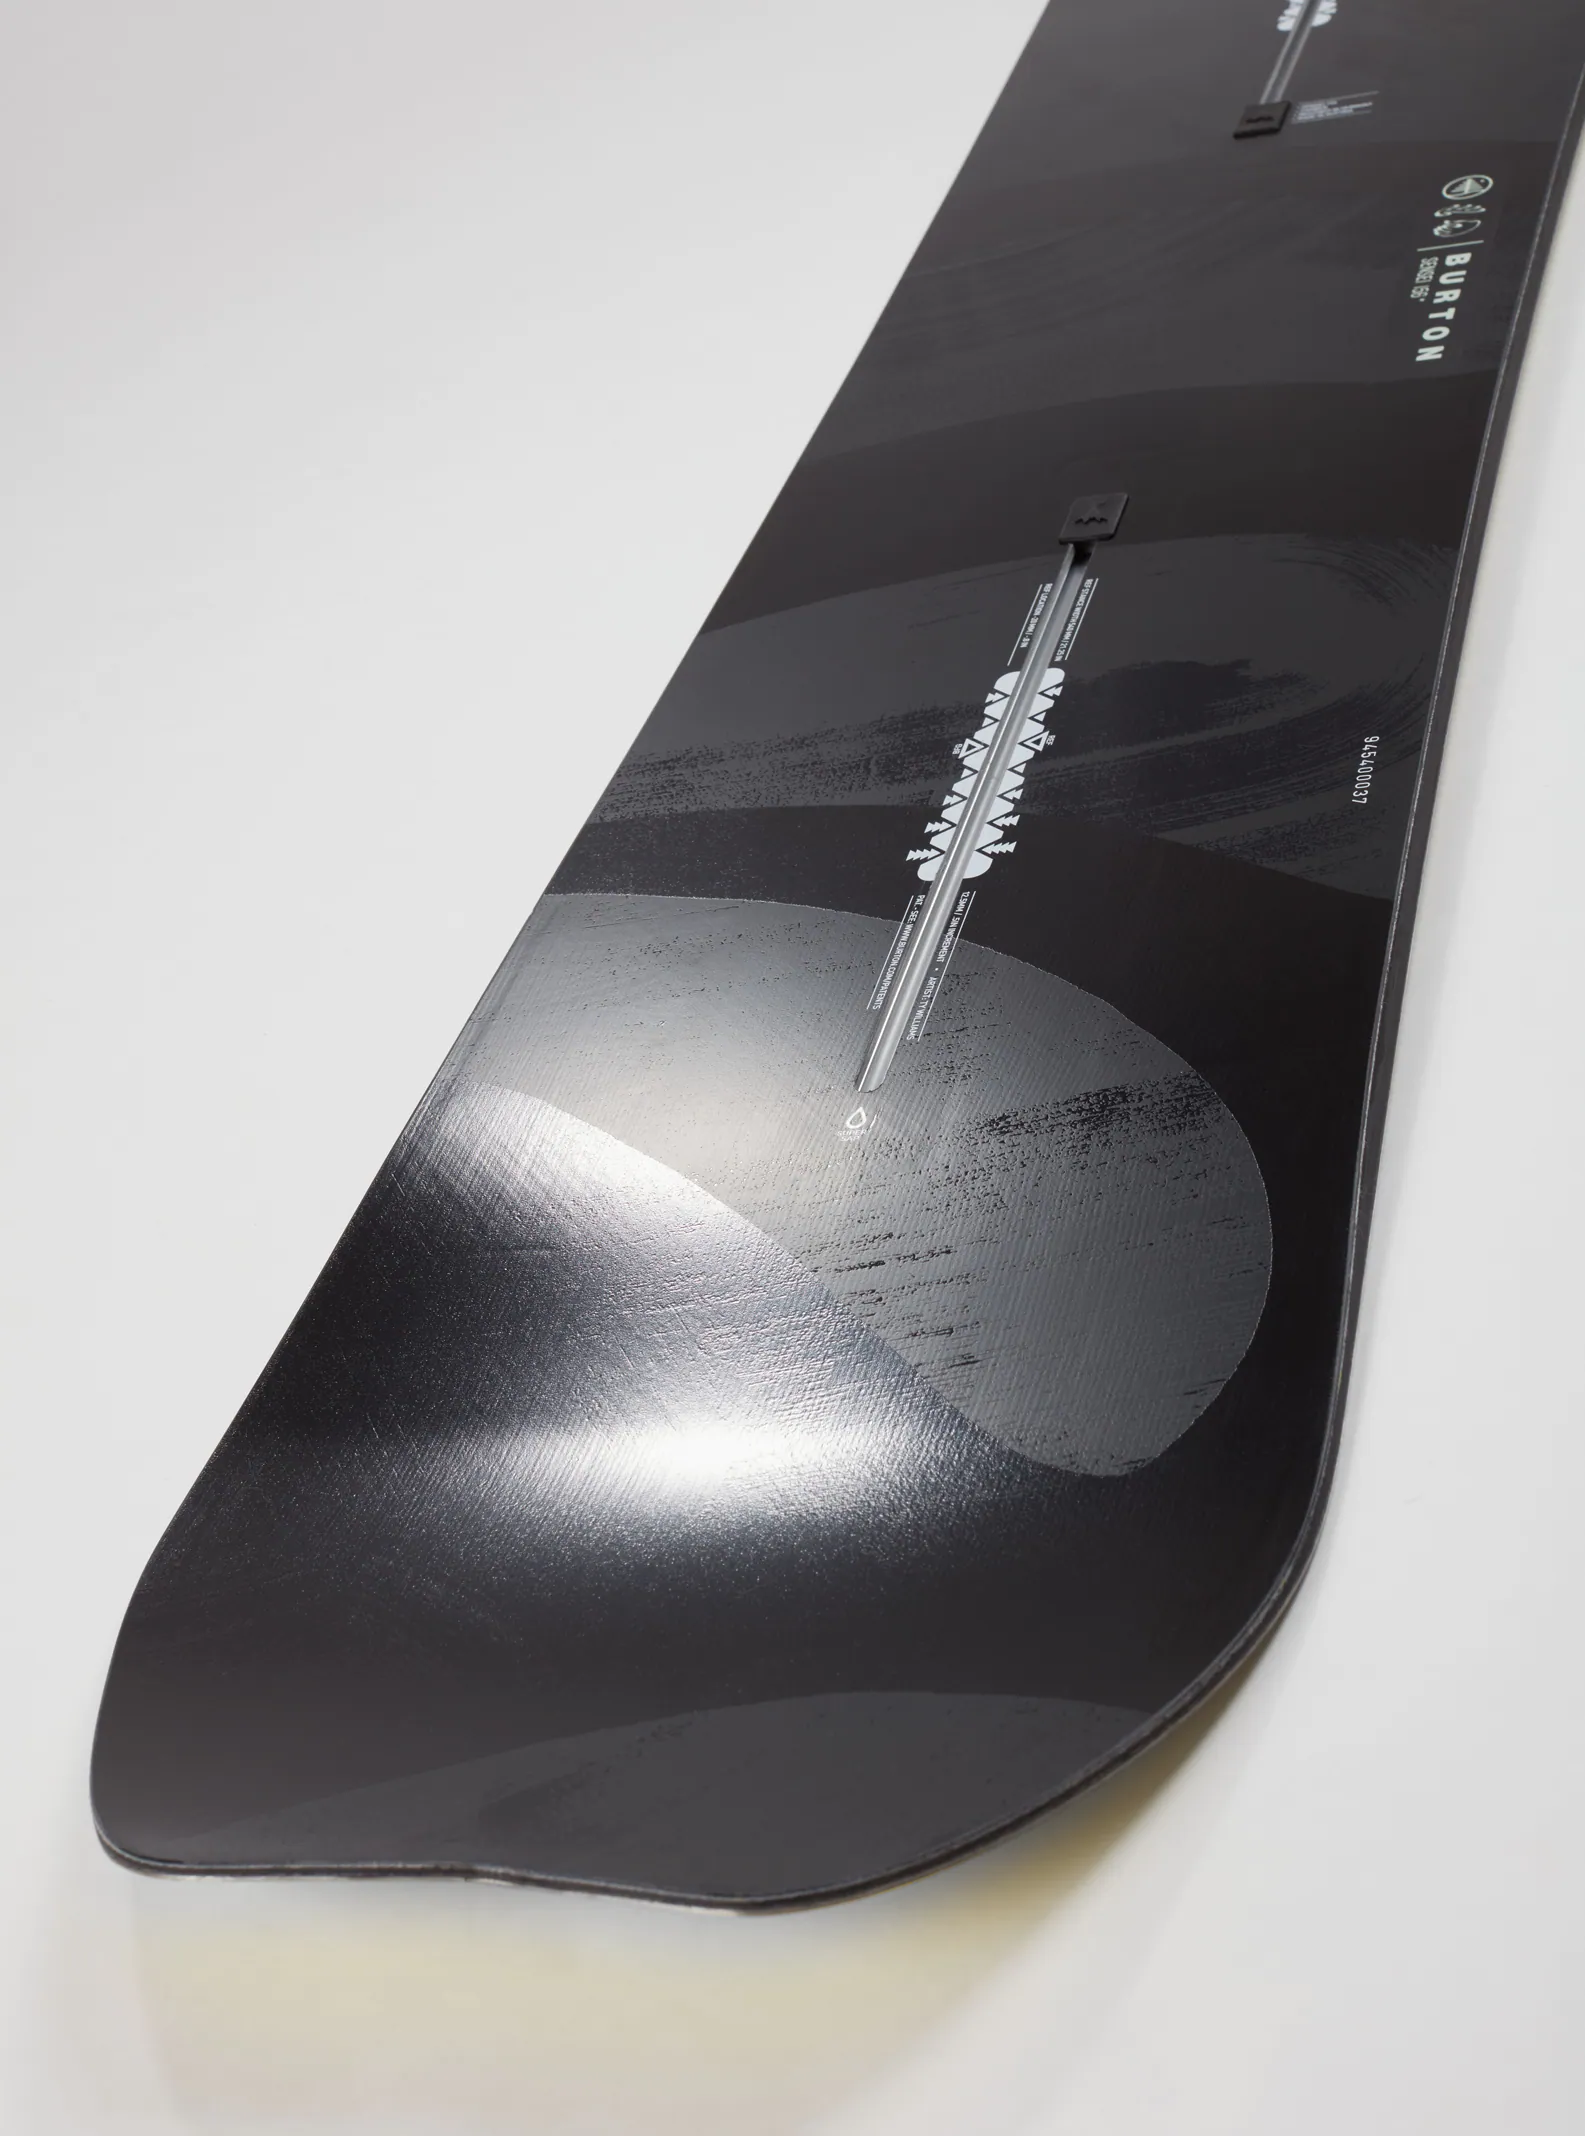 US$ 649.95 - Burton Family Tree Sensei Camber Snowboard - Haley Snowboards